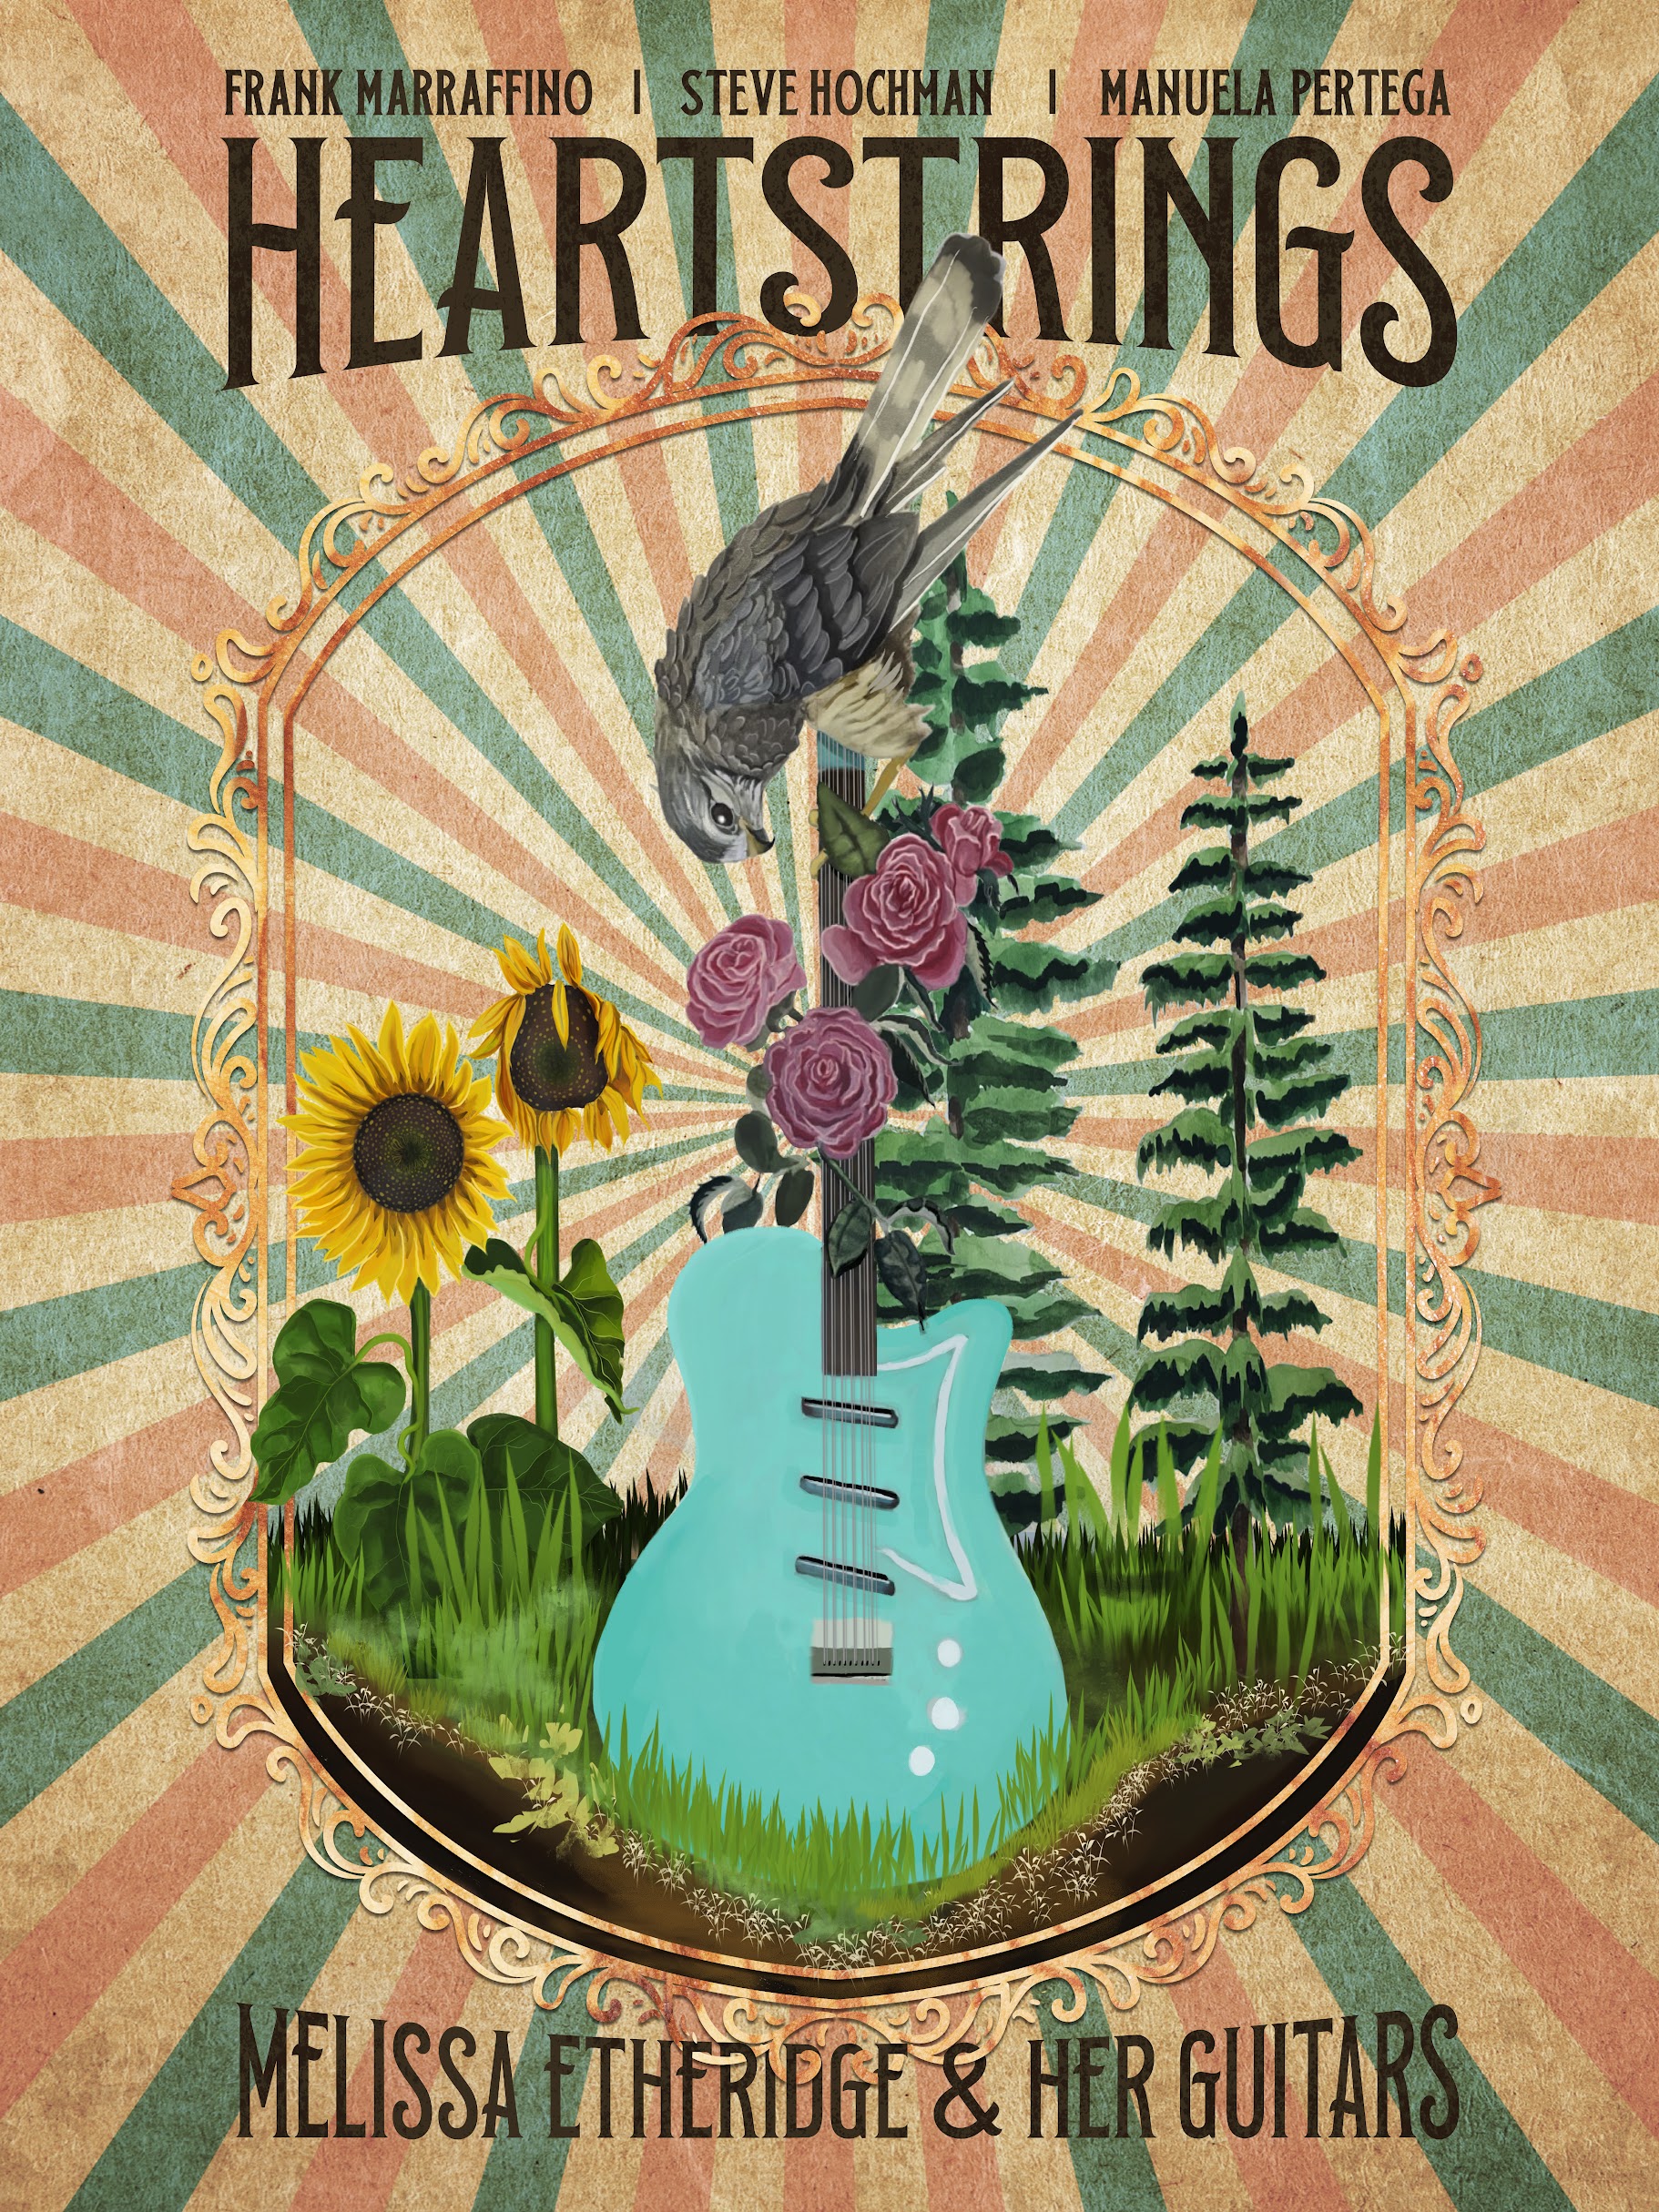 Heartstrings Melissa Etheridge And Her Guitars Graphic Novel